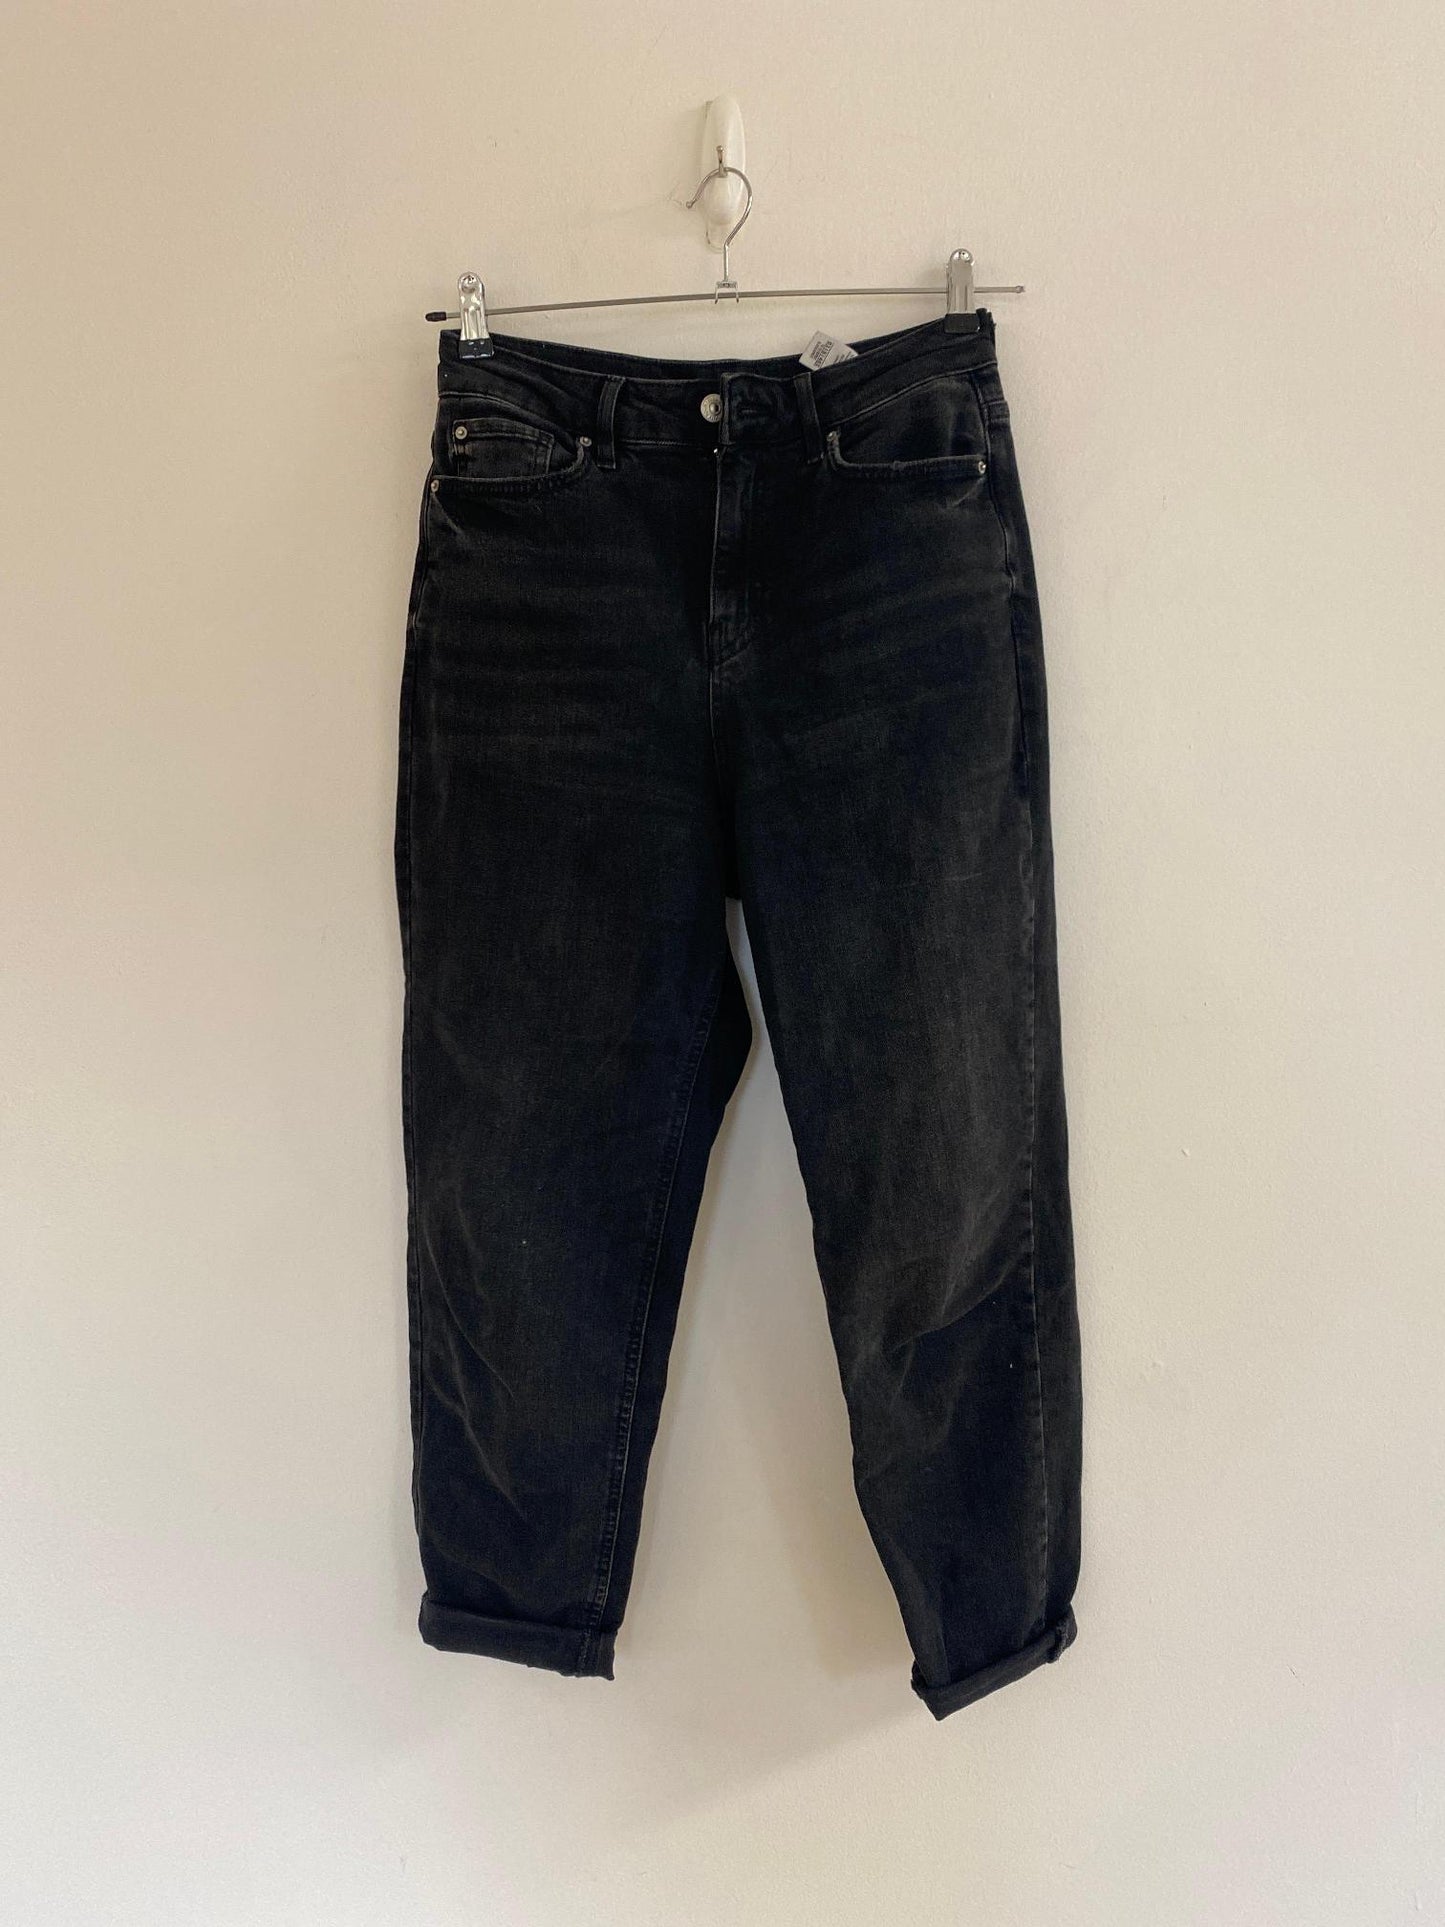 Black high rise jeans, M&S, Size 10 - Damaged Item Sale